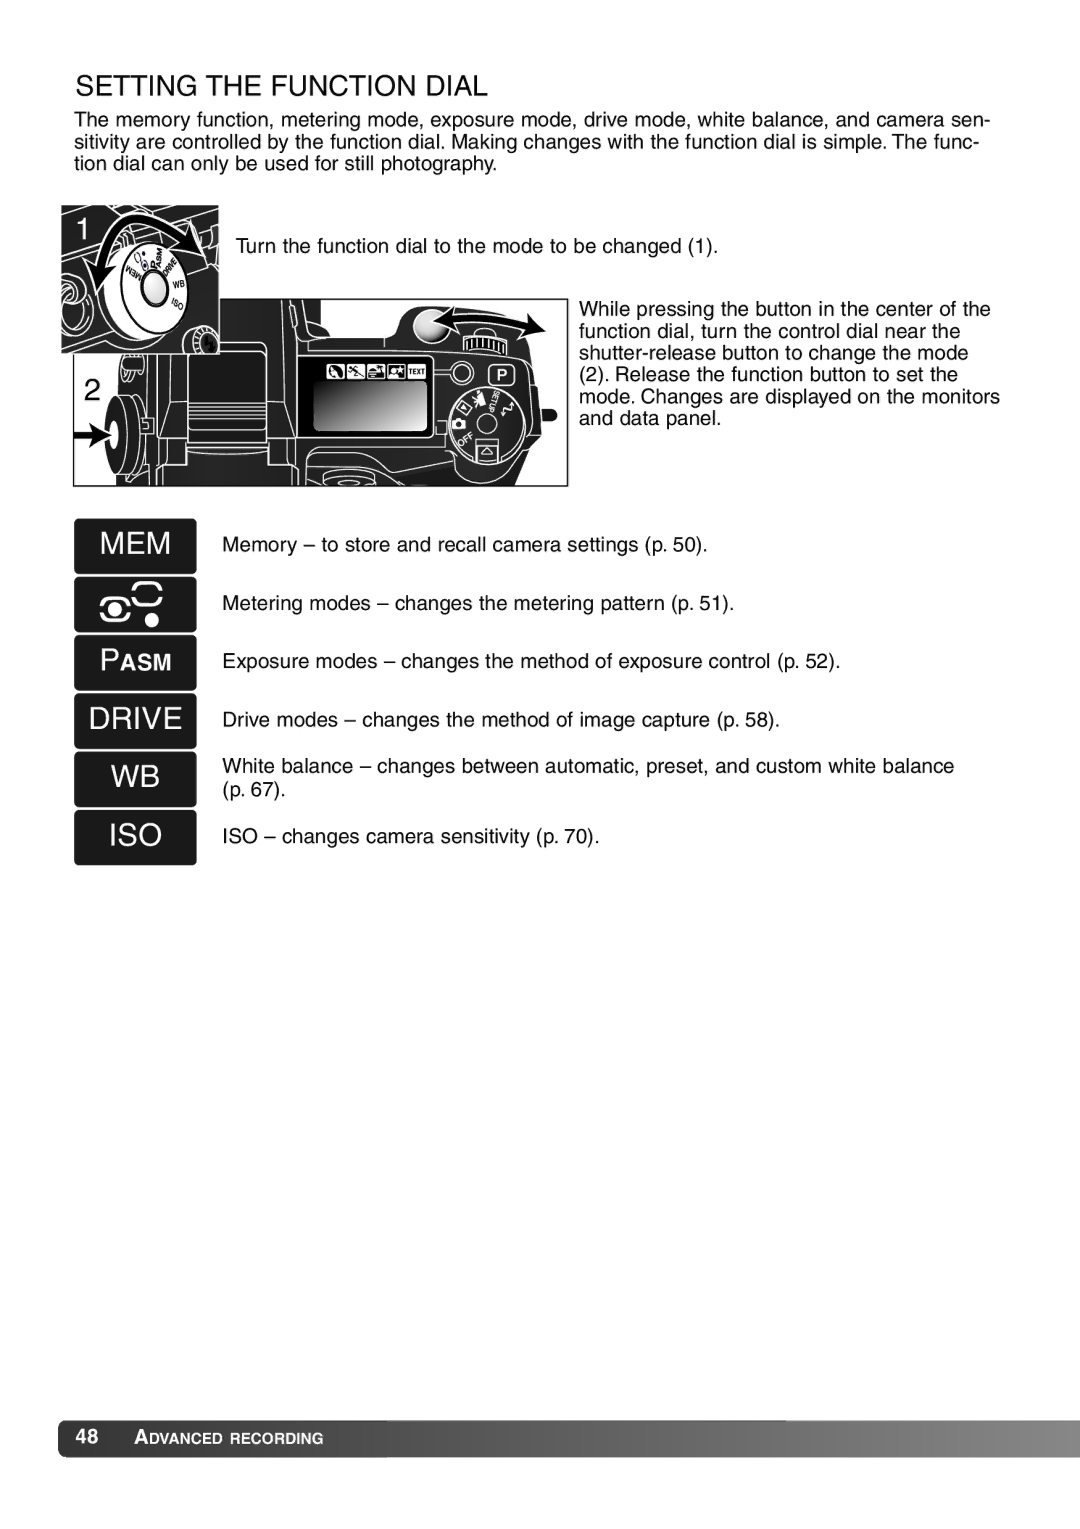 Konica Minolta 7Hi instruction manual Drive ISO, Setting the Function Dial 